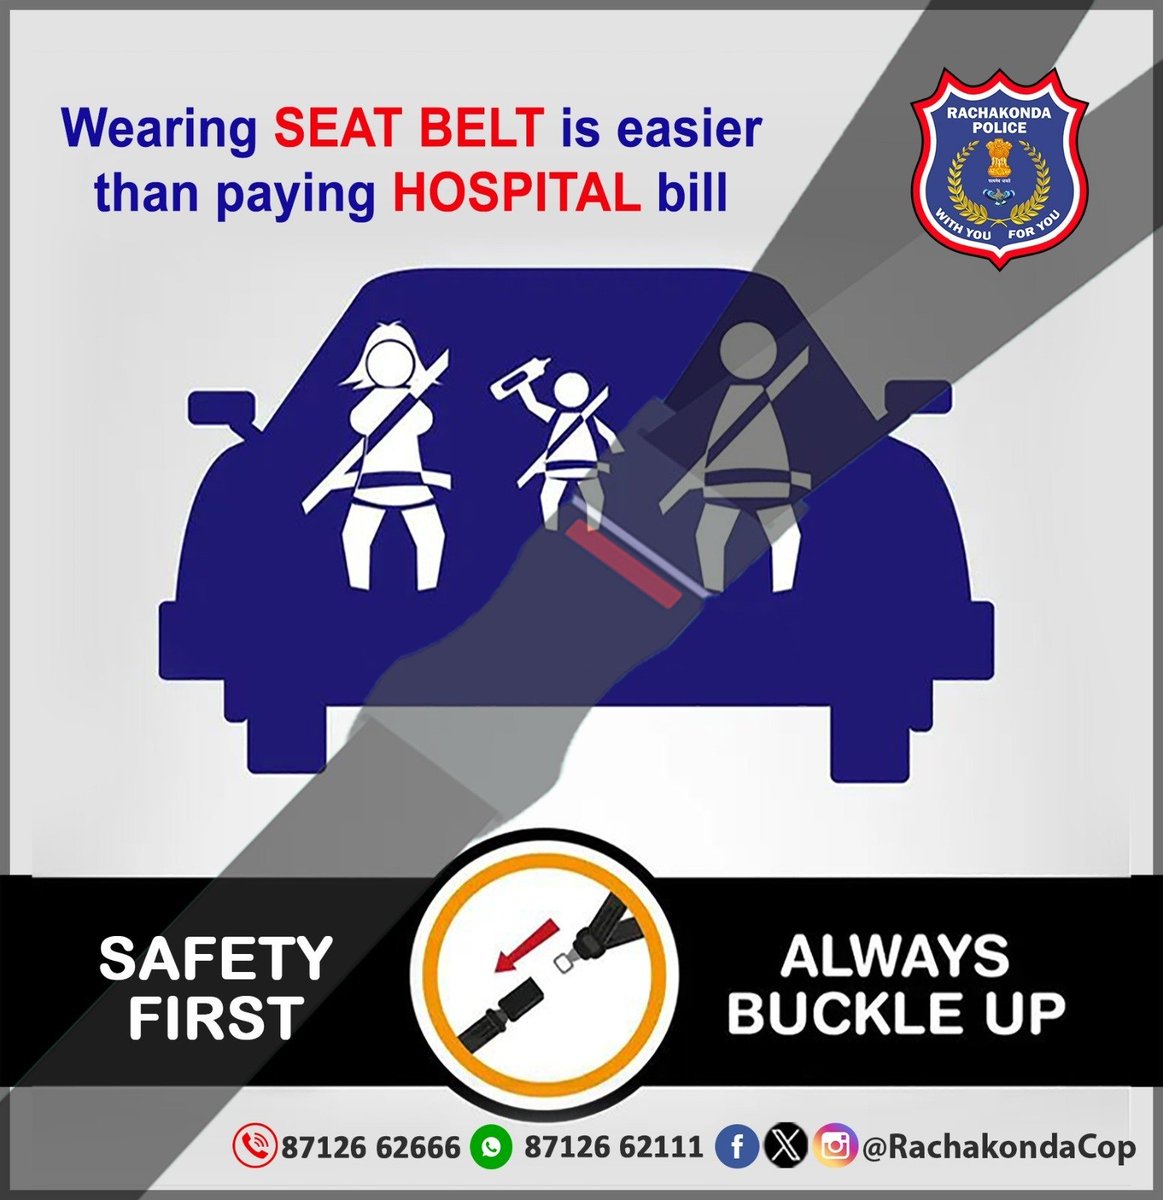 Wearing a #Seatbelt is easier than paying a #Hospital bill.

#RoadSafety
#DriveSafe 
#FollowTrafficRules